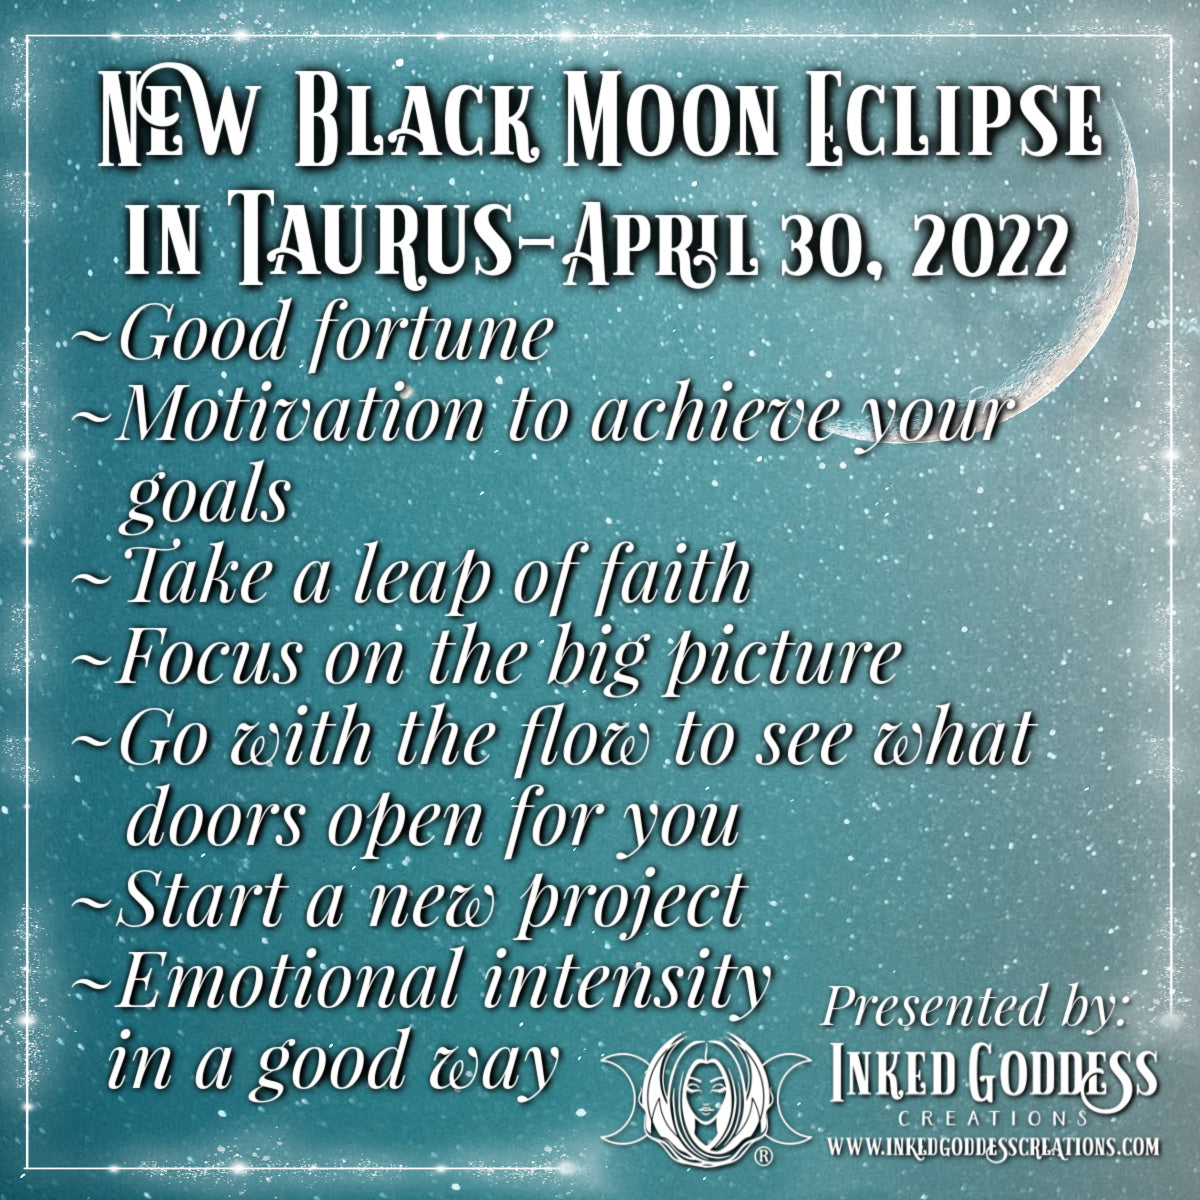 New Black Moon Eclipse in Taurus- April 30, 2022